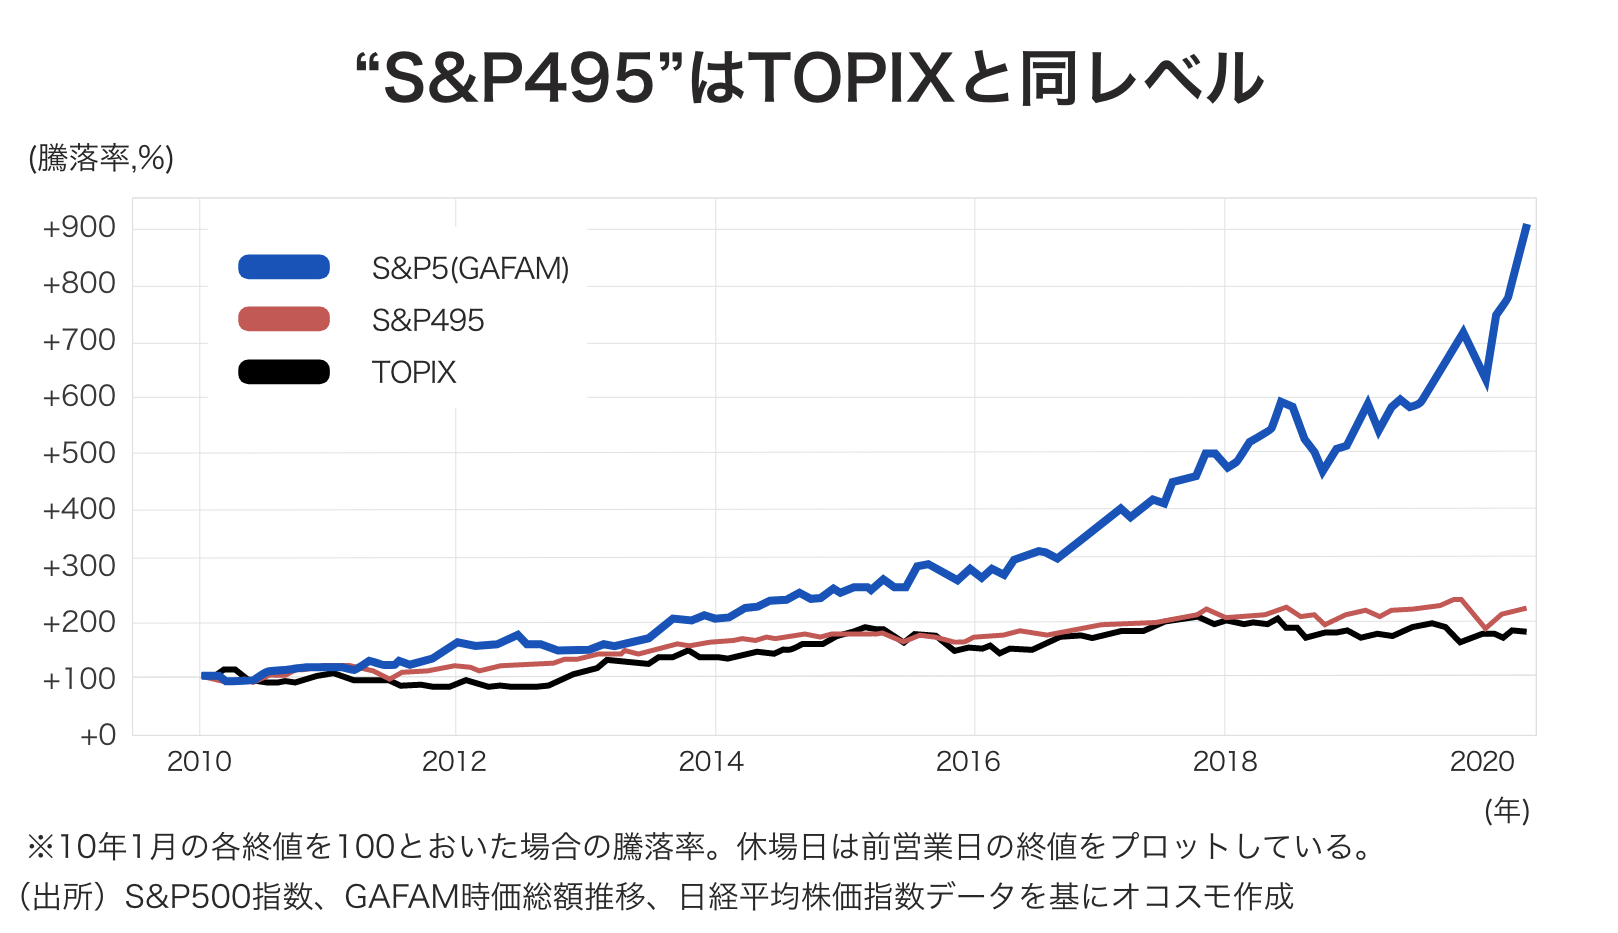 SP495の株価上昇率はTOPIXと同レベル